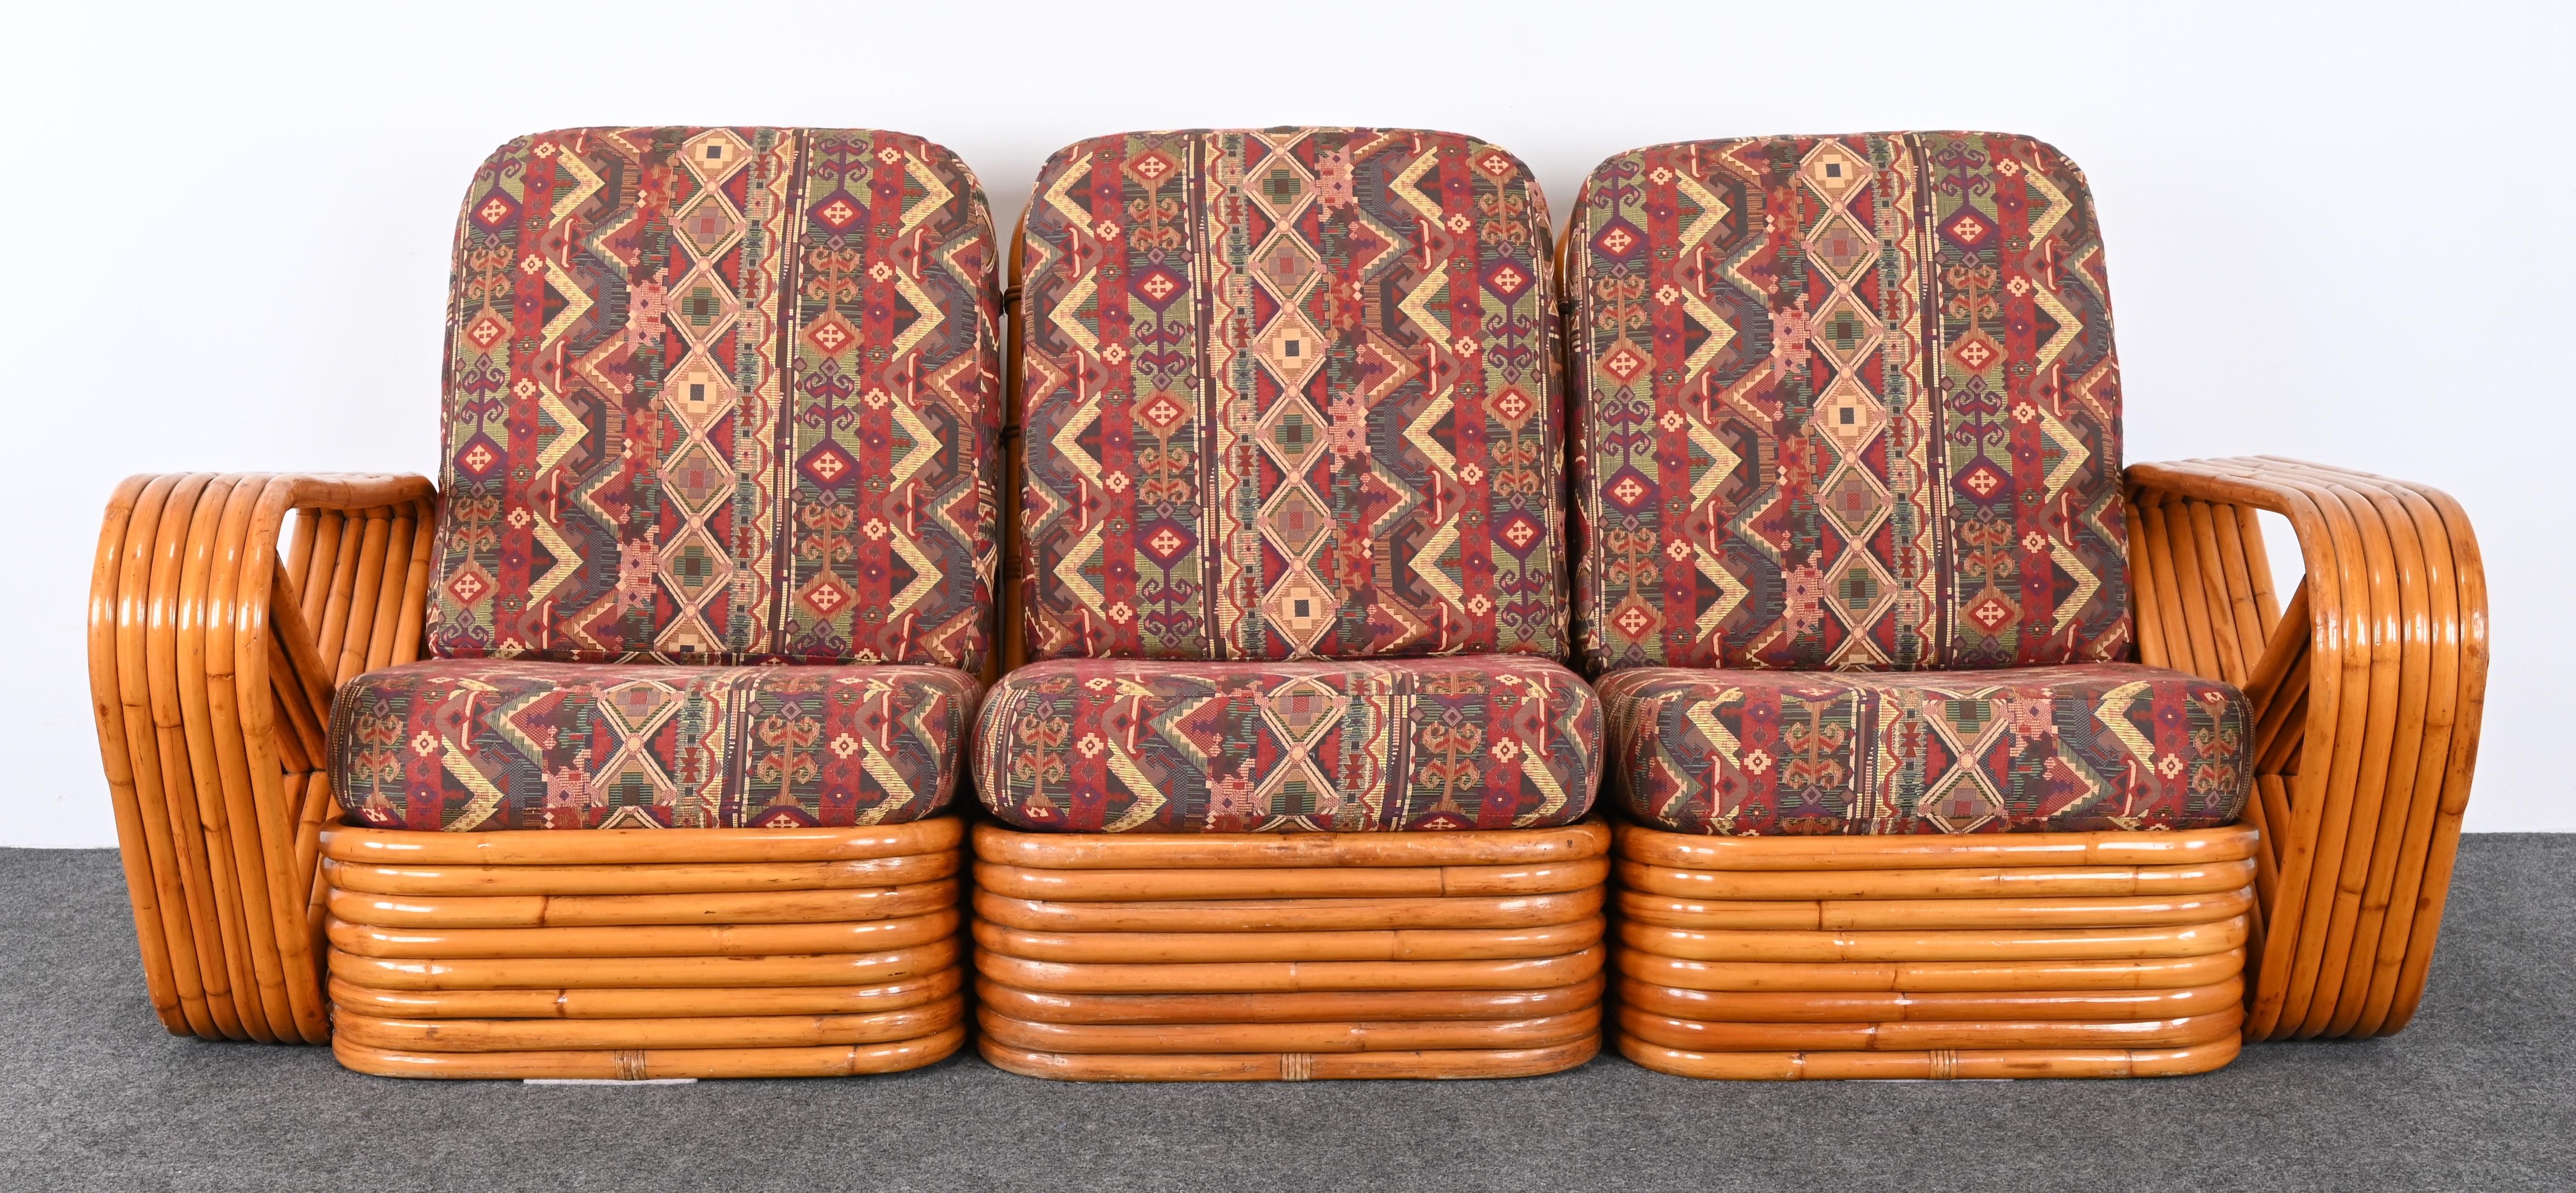 Set aus Rattanmöbeln im Paul-Frankl-Stil, 1940er-Jahre (Polster)